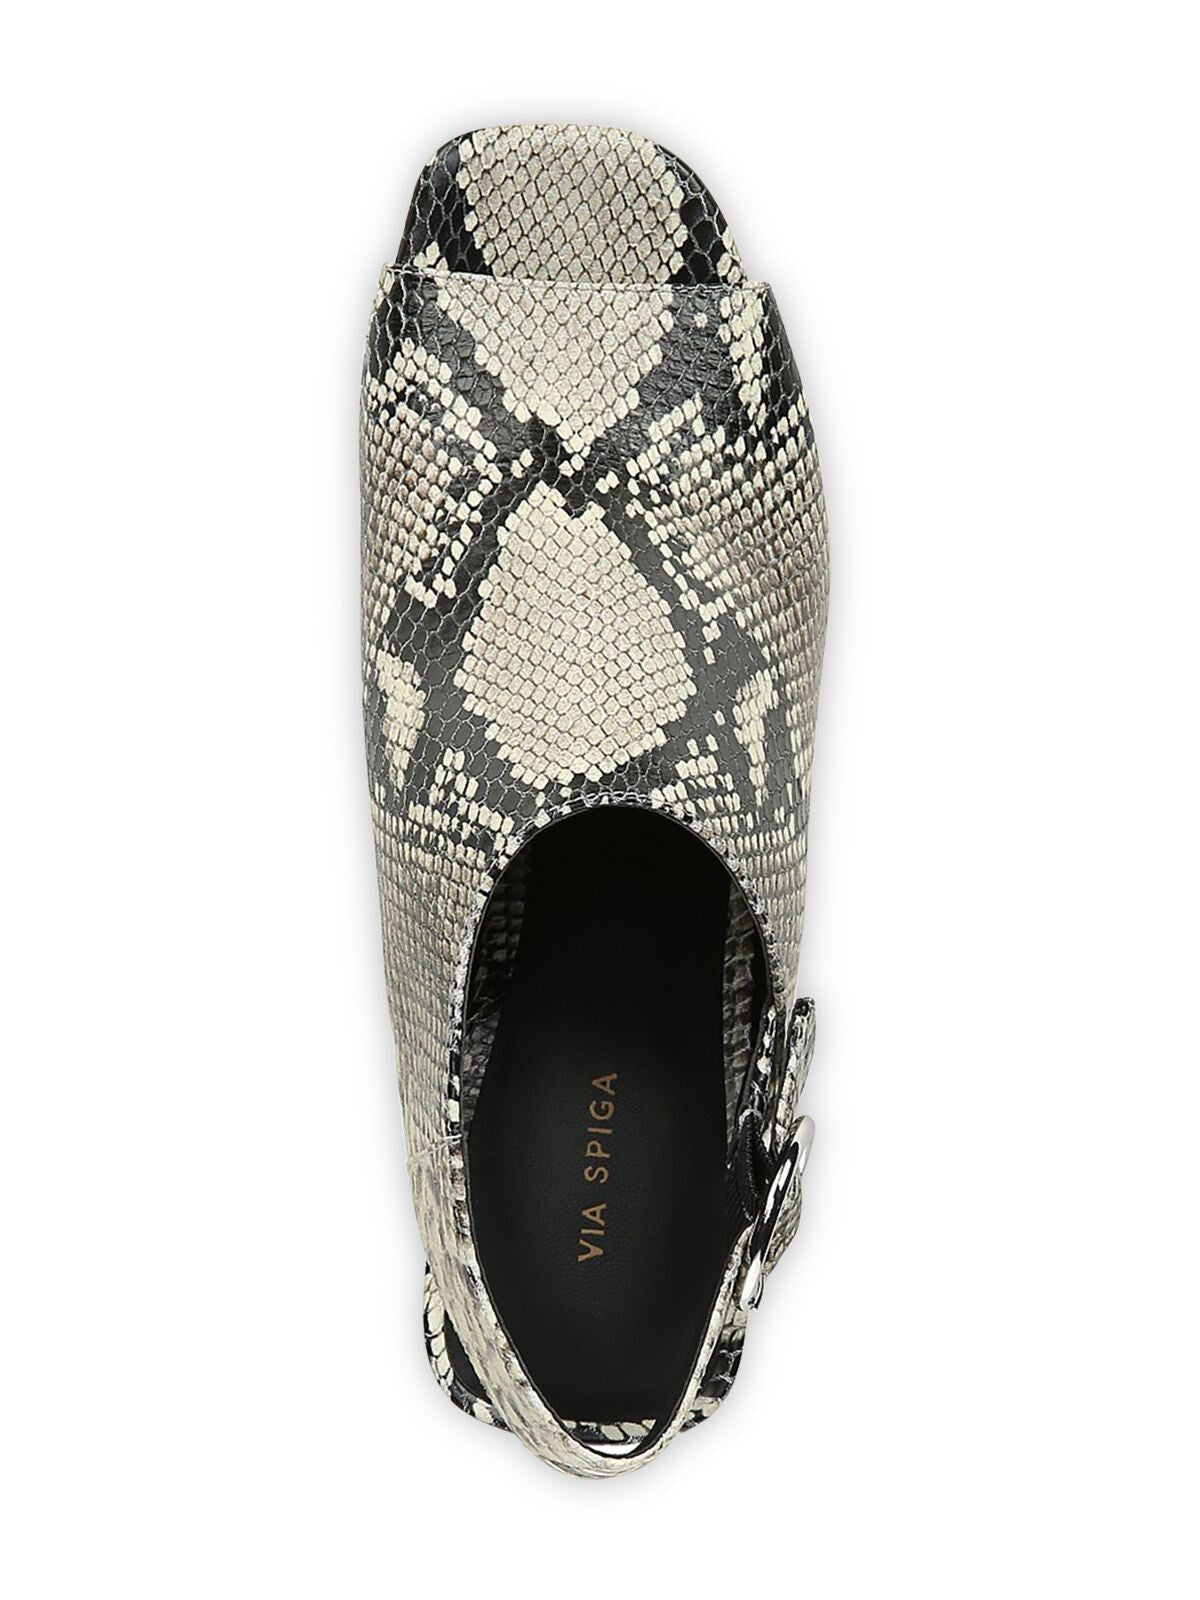 VIA SPIGA Womens Beige Snake Print Asymmetrical Padded Adjustable Elma Square Toe Block Heel Buckle Leather Slingback Sandal 7.5 M